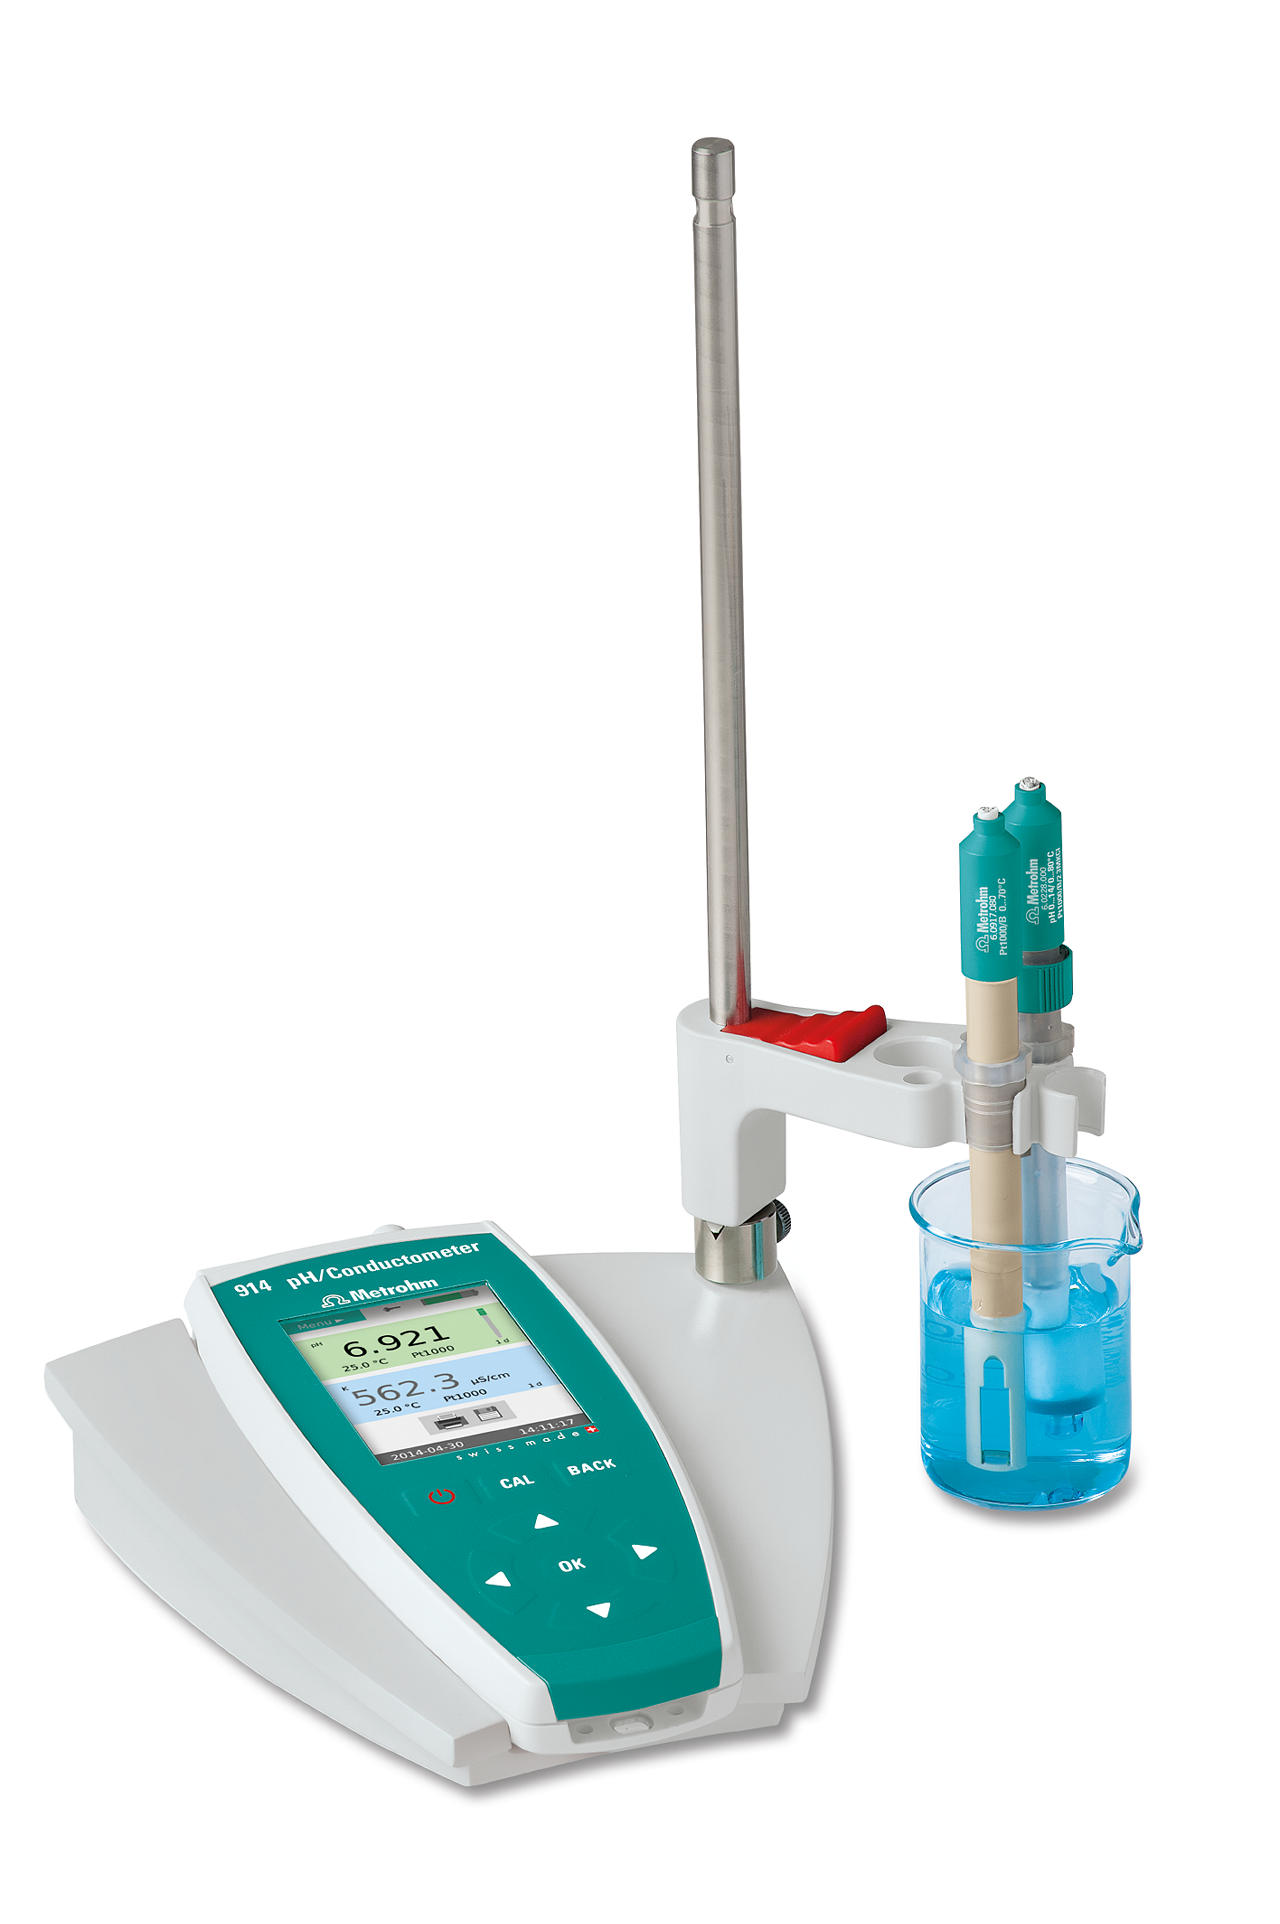 Кондуктометр 914 pH/Conductometer с диапазоном измерения 0,1 мкСм - 500 мСм